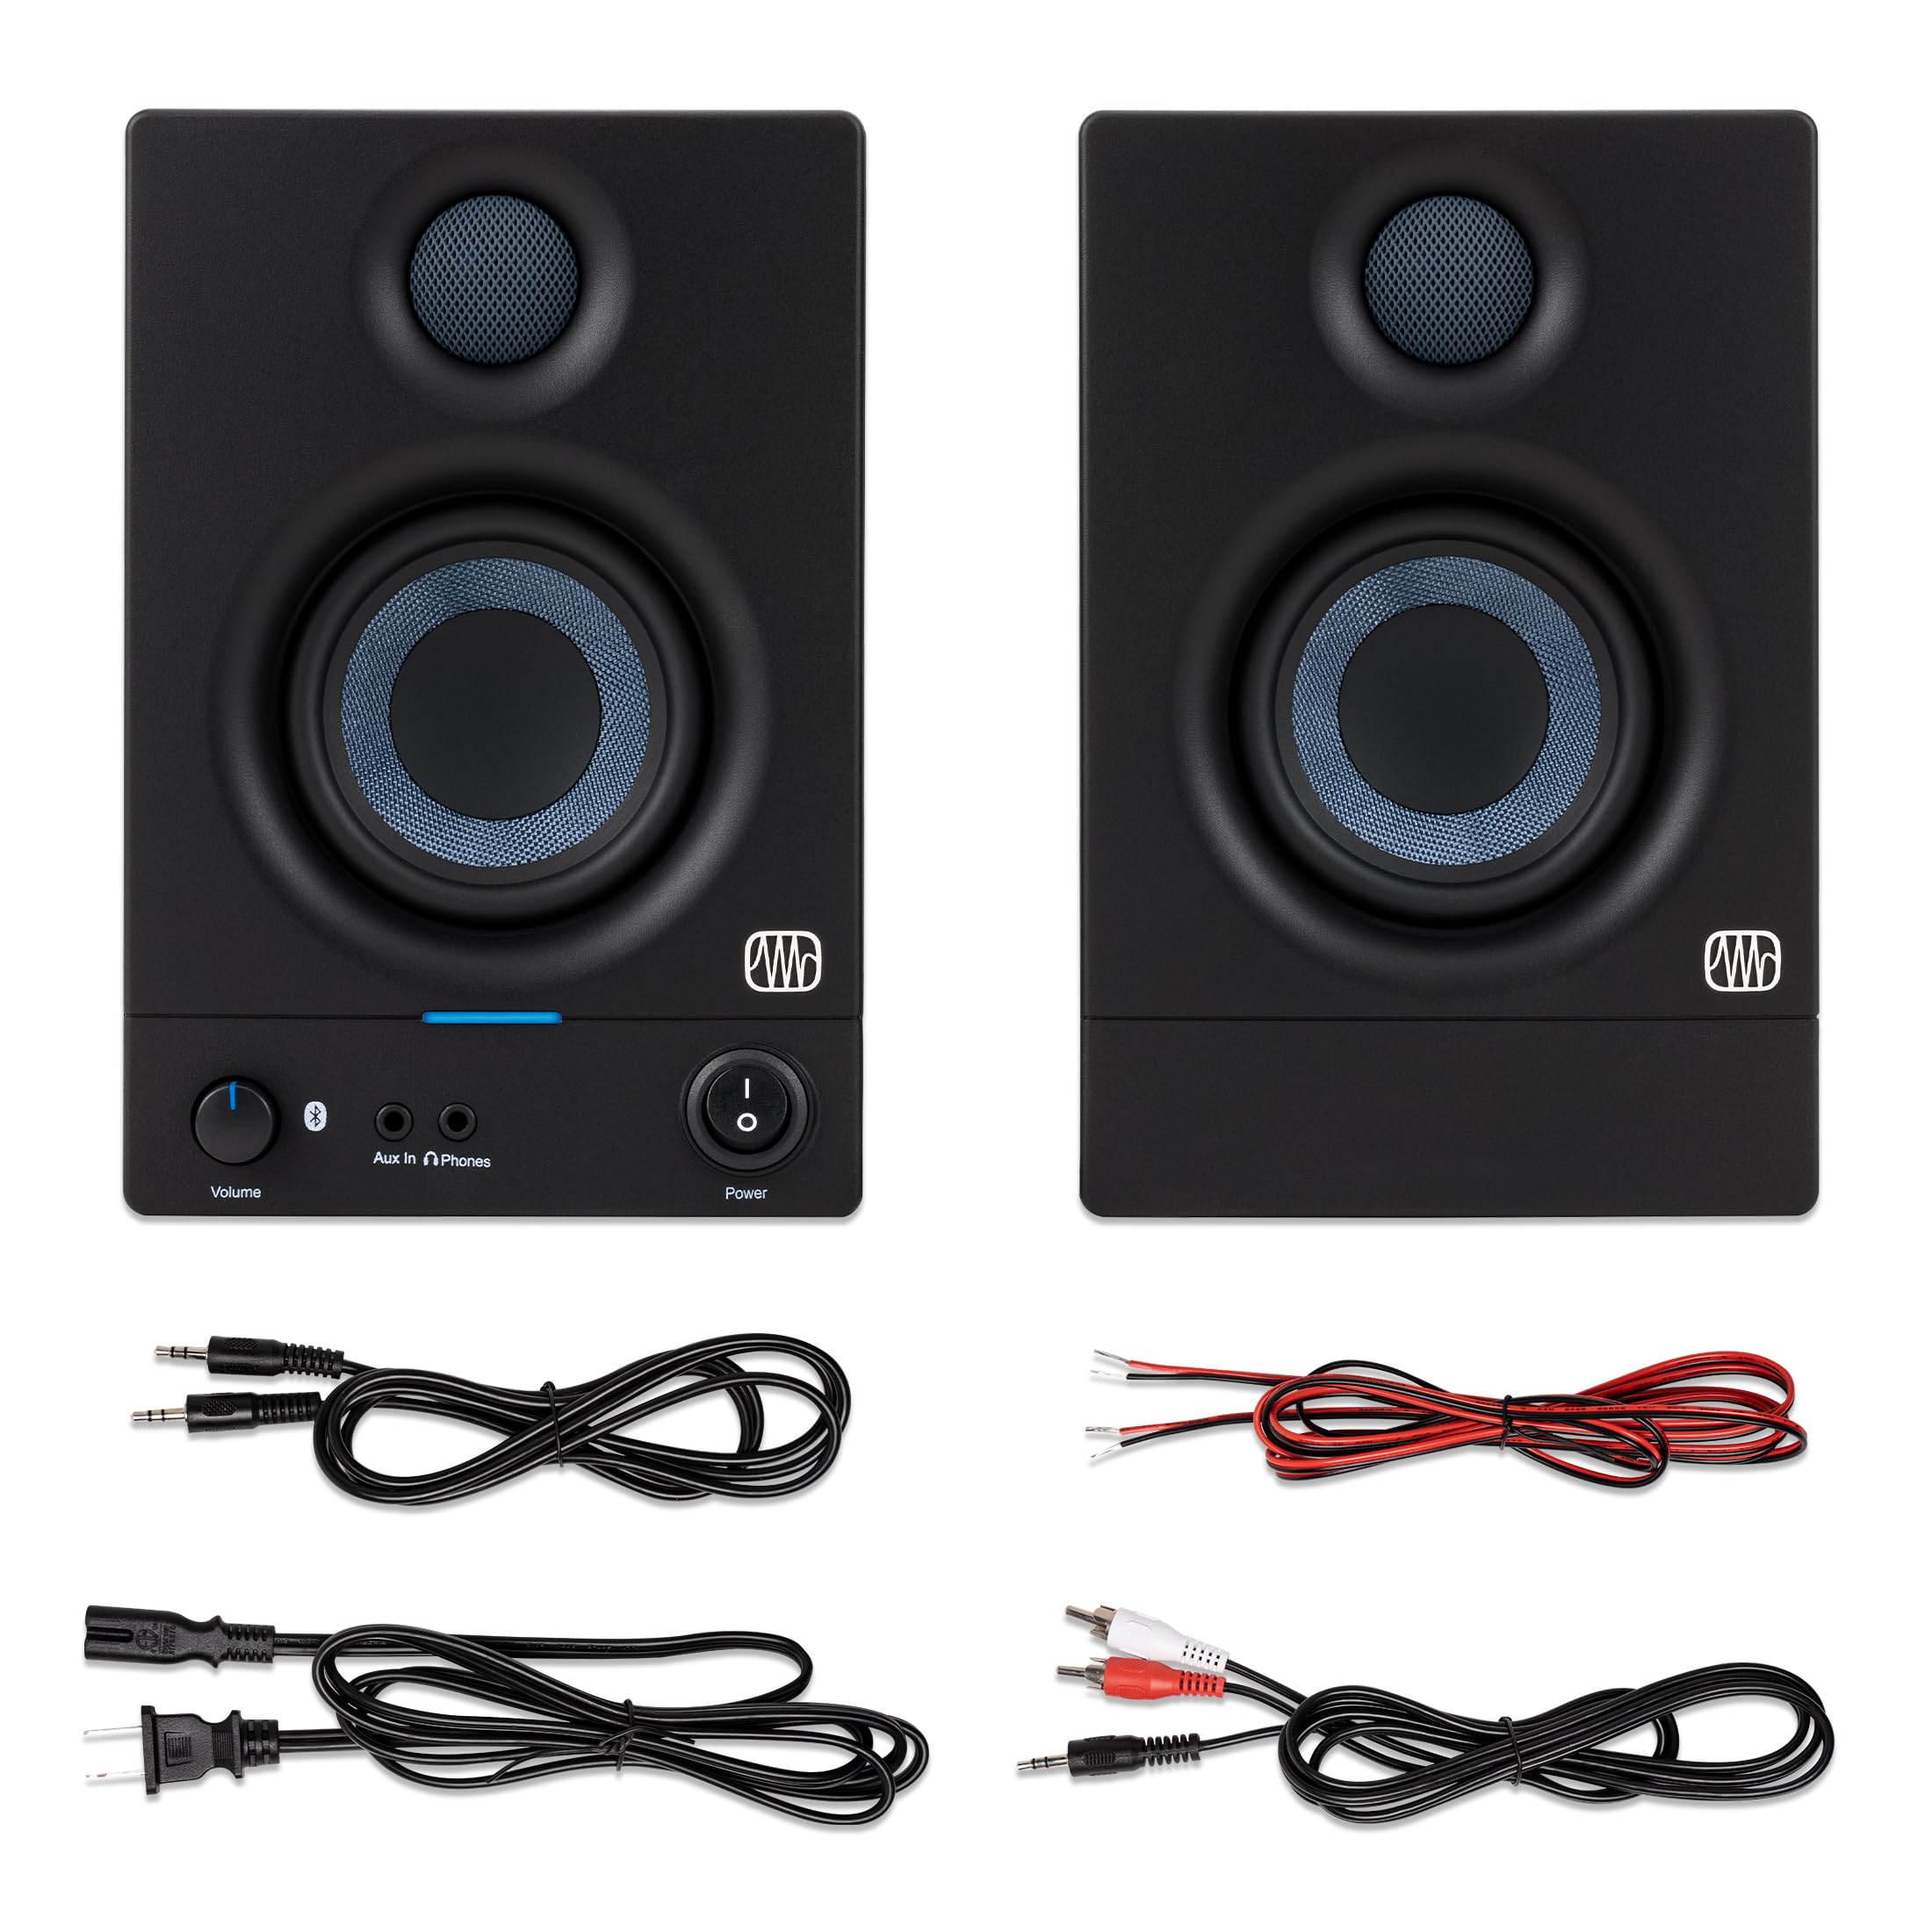 PreSonus Eris 5BT Gen 2 — 5-inch Powered Desktop Speakers with Bluetooth for Multimedia, Gaming, Studio-Quality Music Production, 50W Power